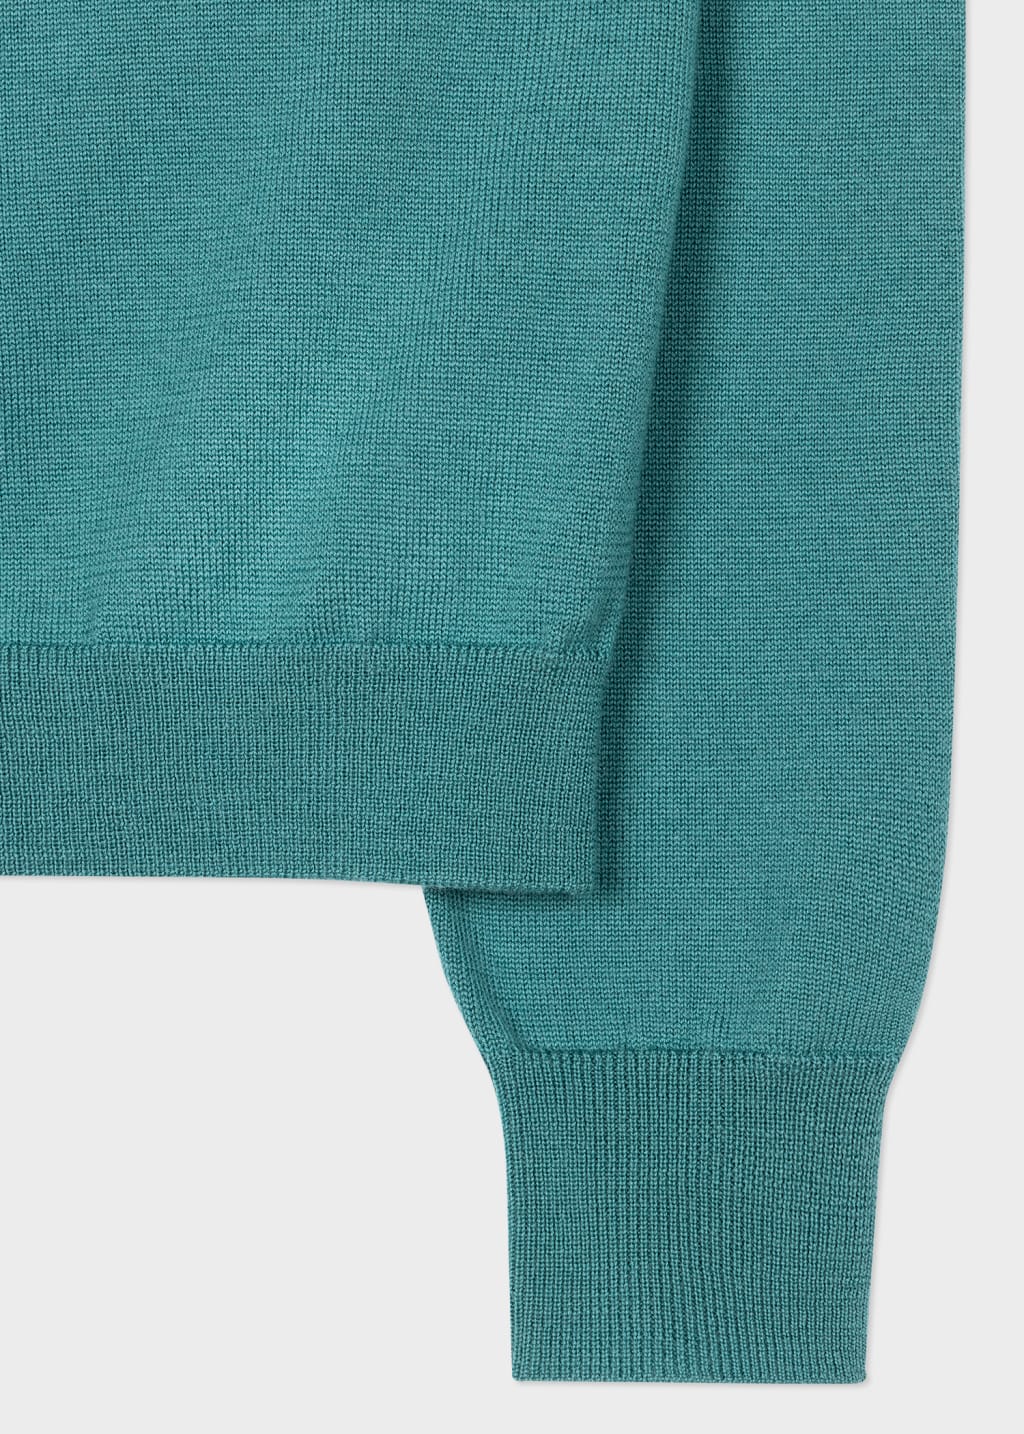 Detail View - Women's Teal Blue Merino Wool 'Signature Stripe' Cardigan Paul Smith